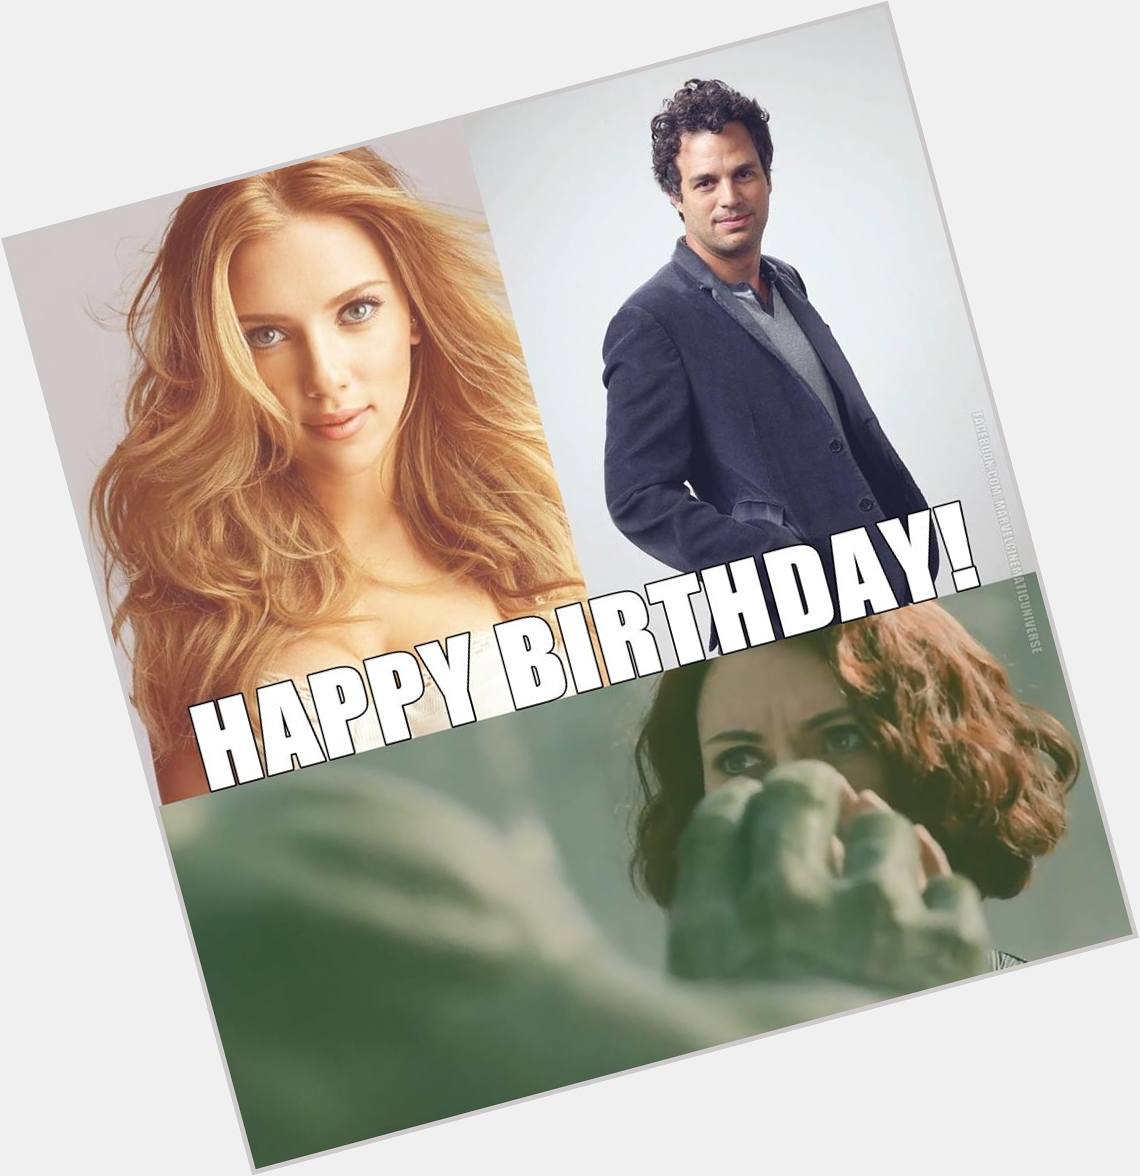 Happy Birthday to both Scarlett Johansson & Mark Ruffalo! 